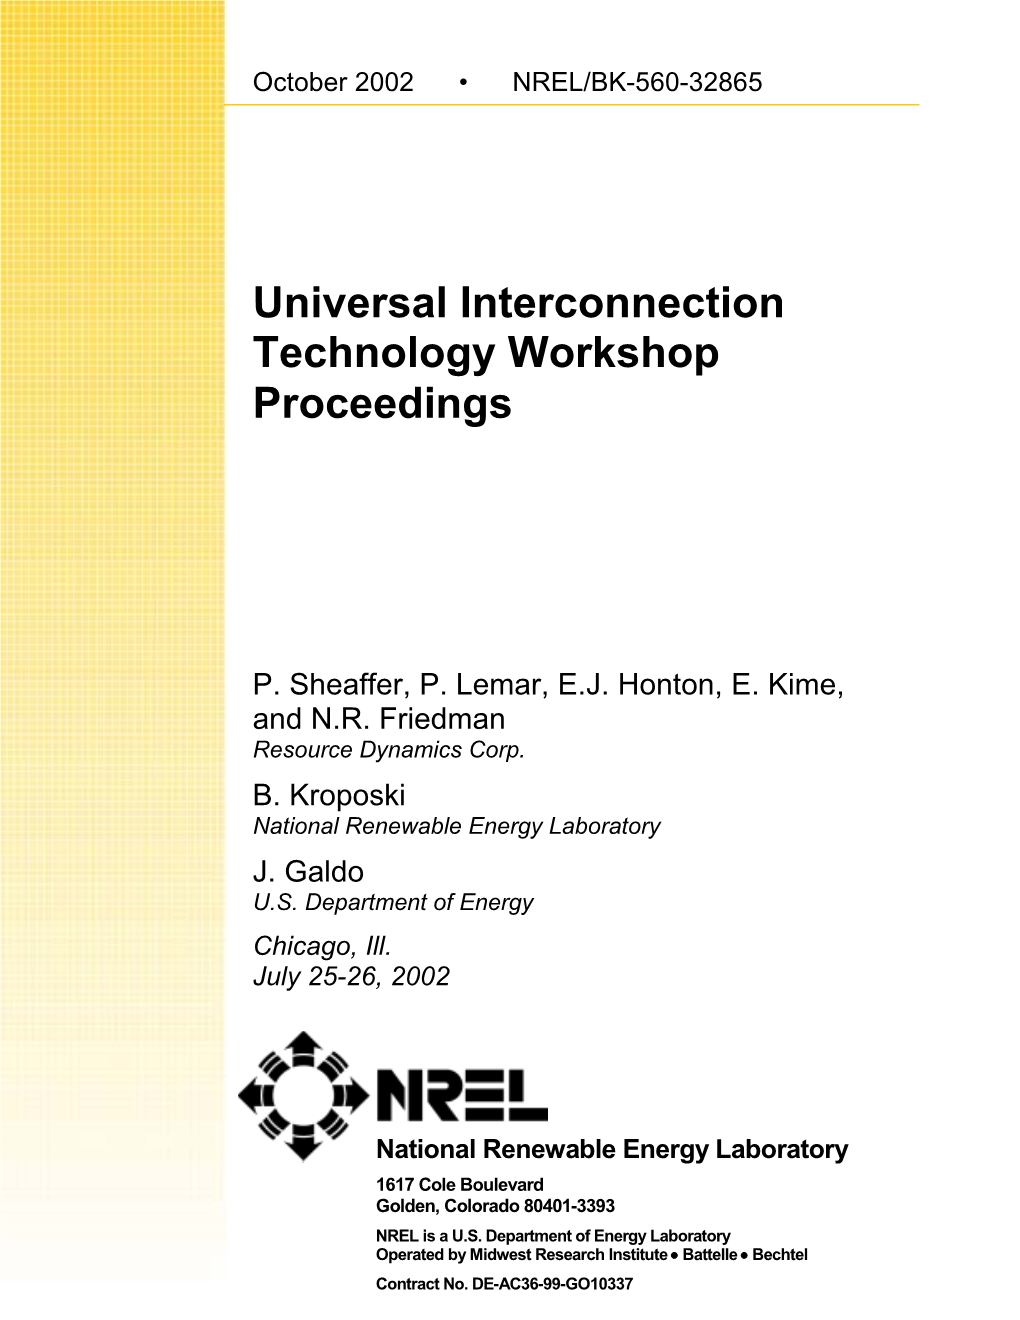 Universal Interconnection Technology Workshop Proceedings